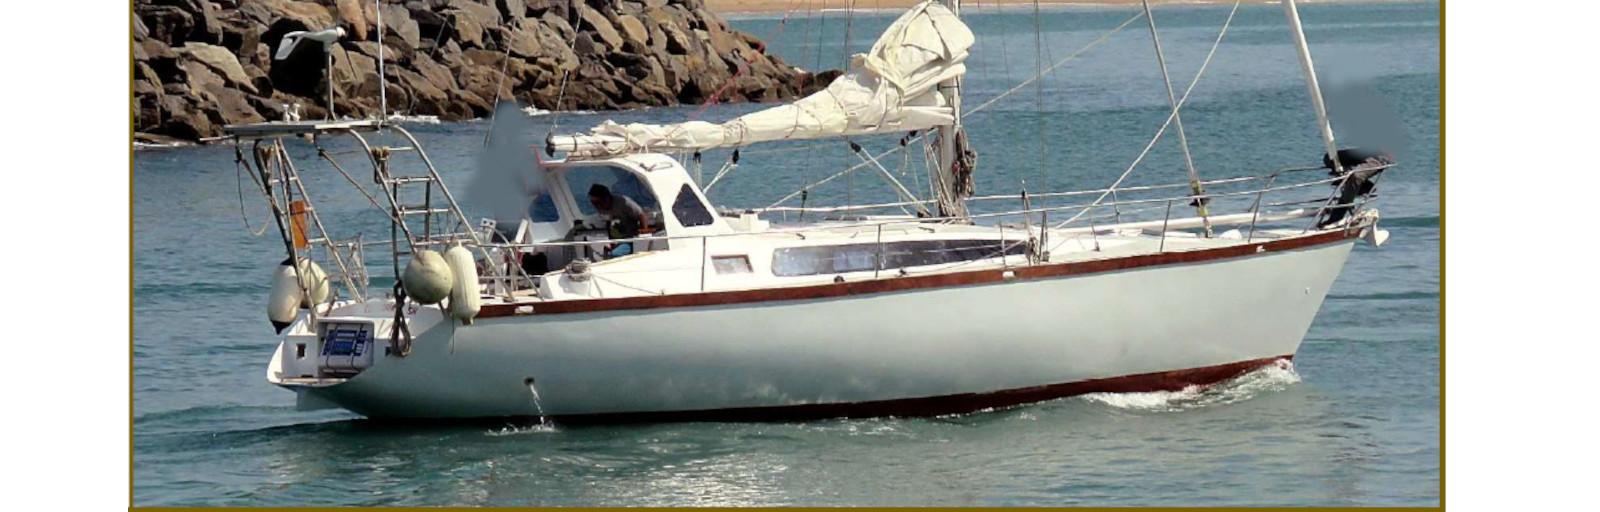 GRAND DUC 47 - AYC International Yachtbroker